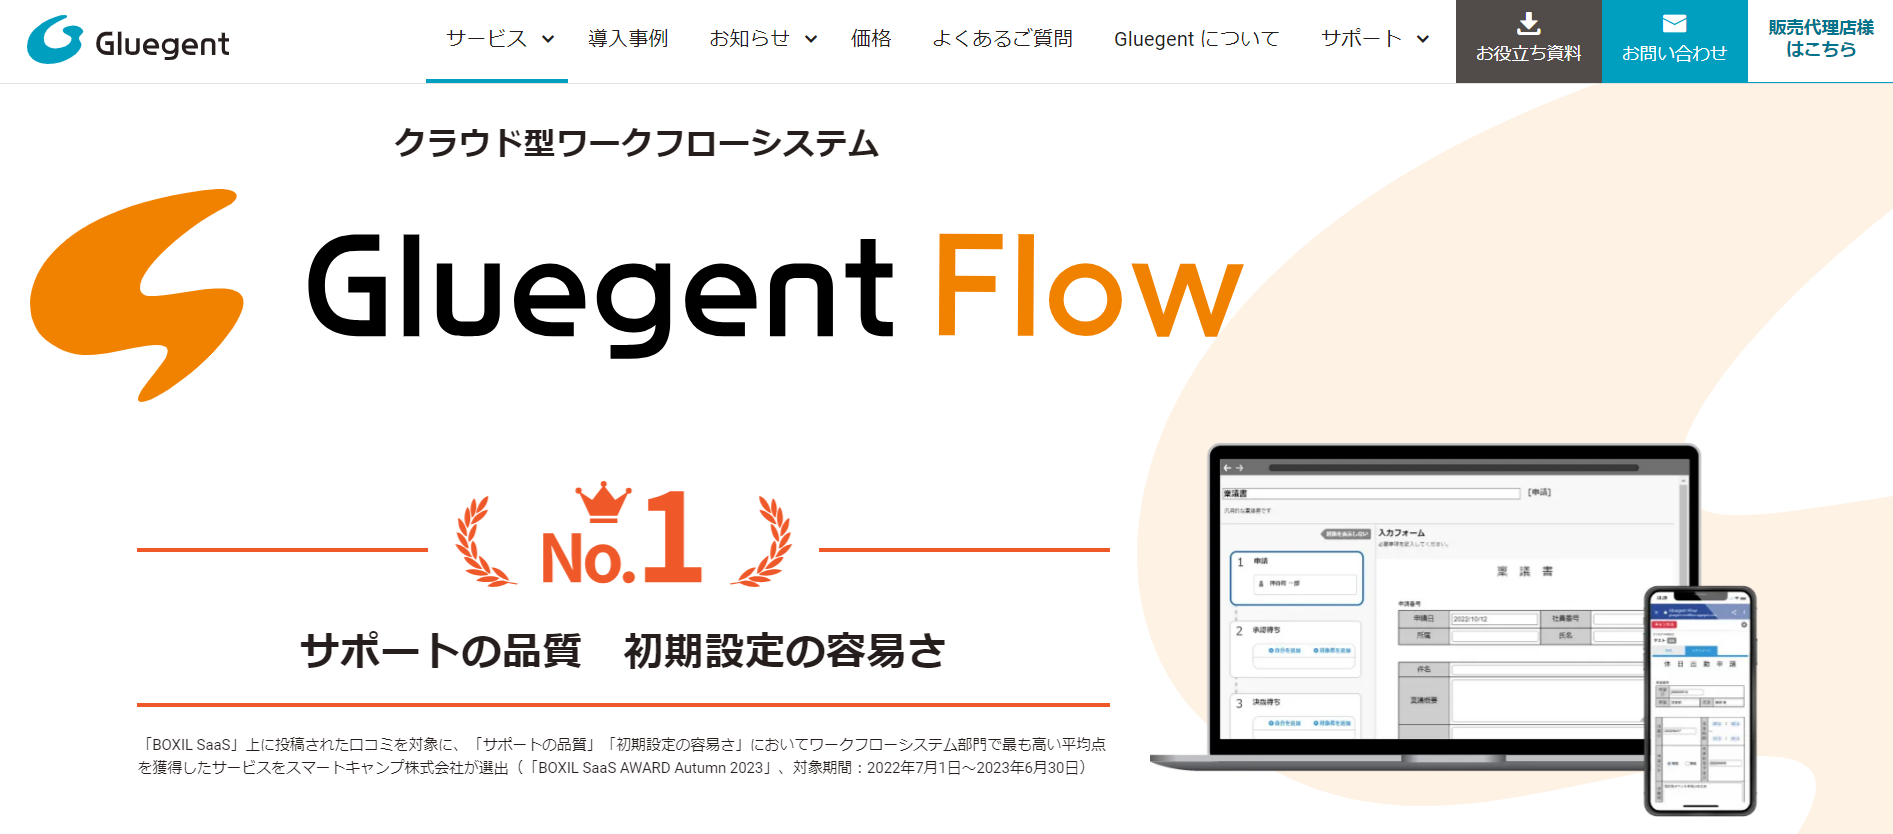 Gluegent Flowのホーム画面